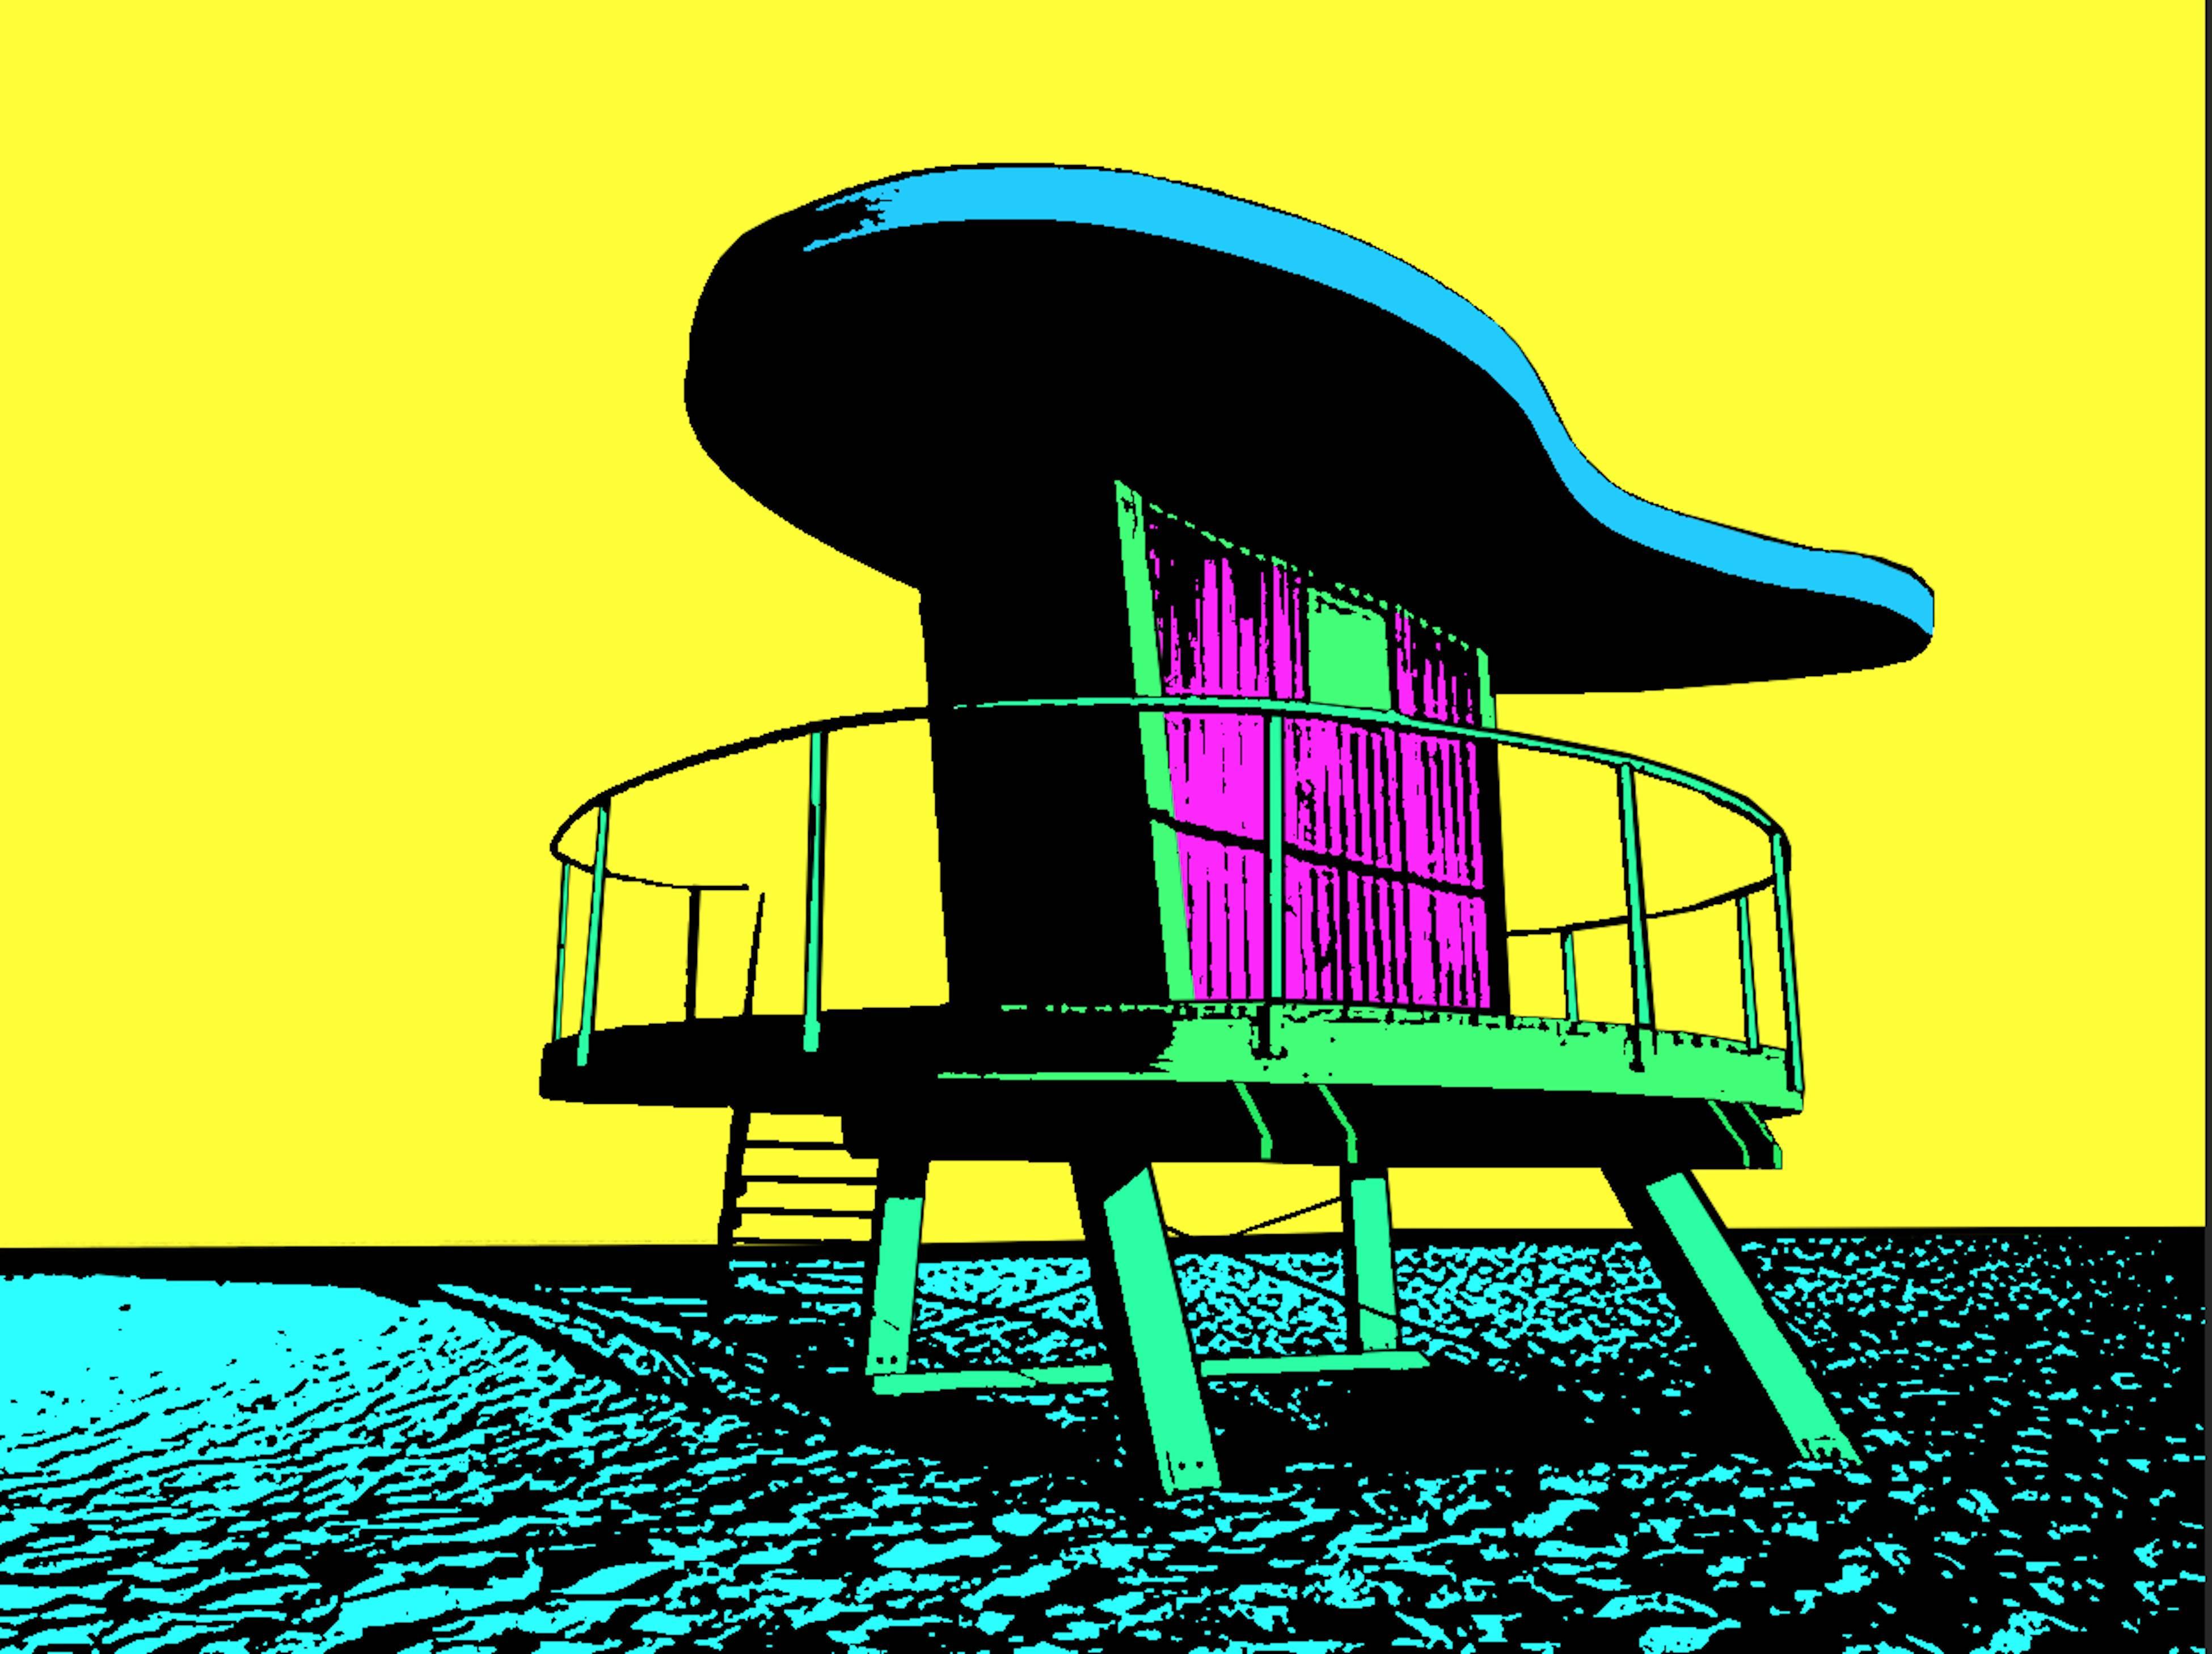 Richard Scudder Abstract Print - Miami Beach Lifeguard Stand #8. - In Yellow, Screen Print